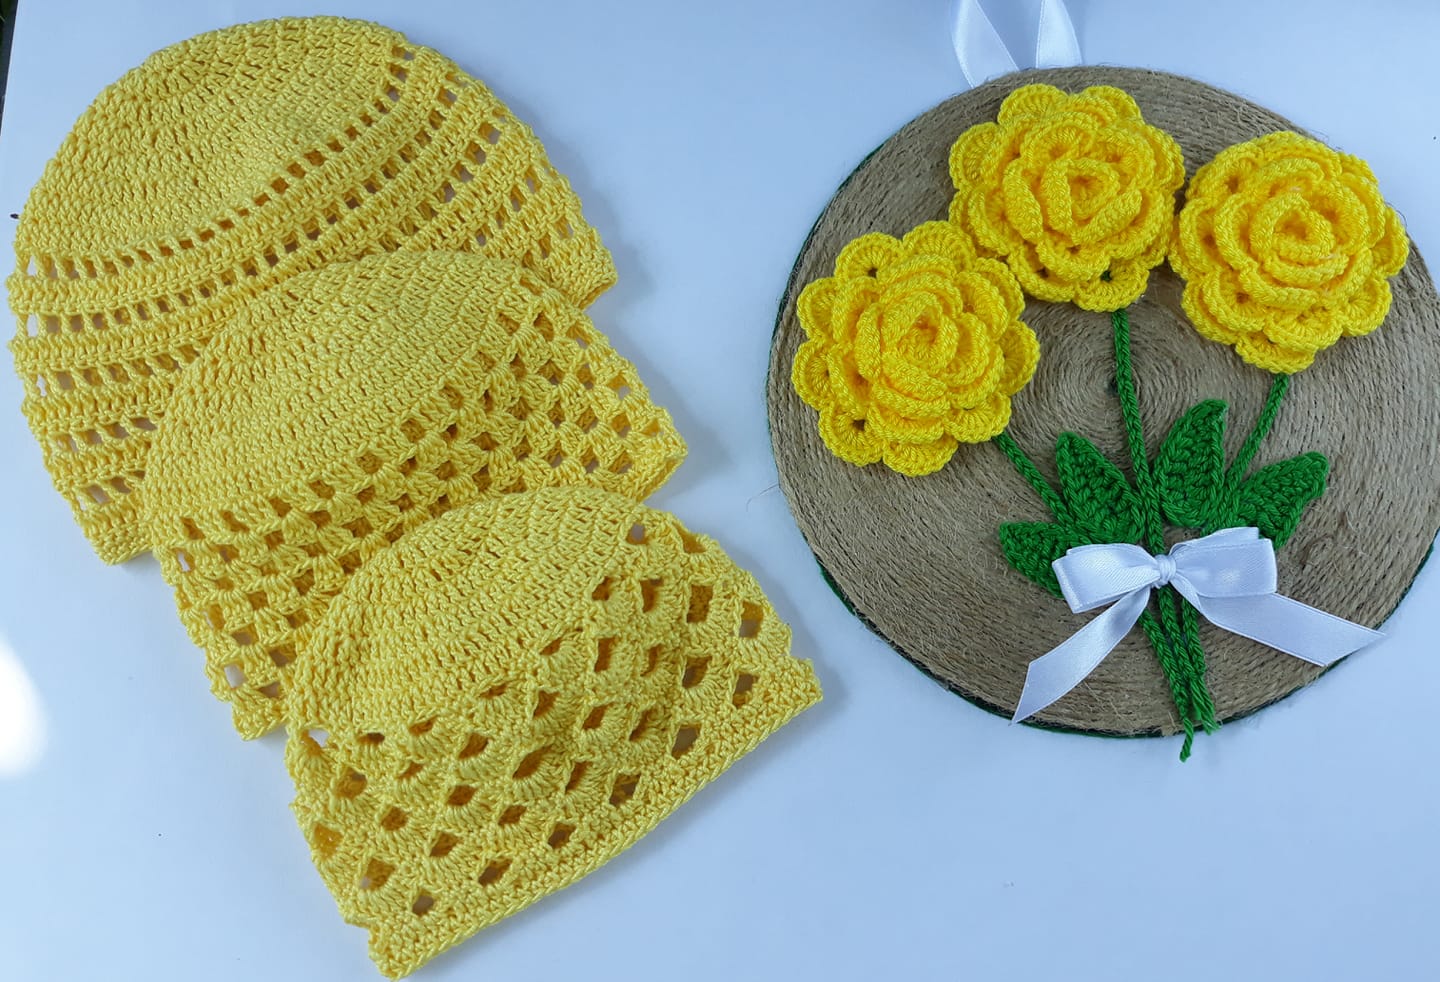 Crochet&craft by Loredana B